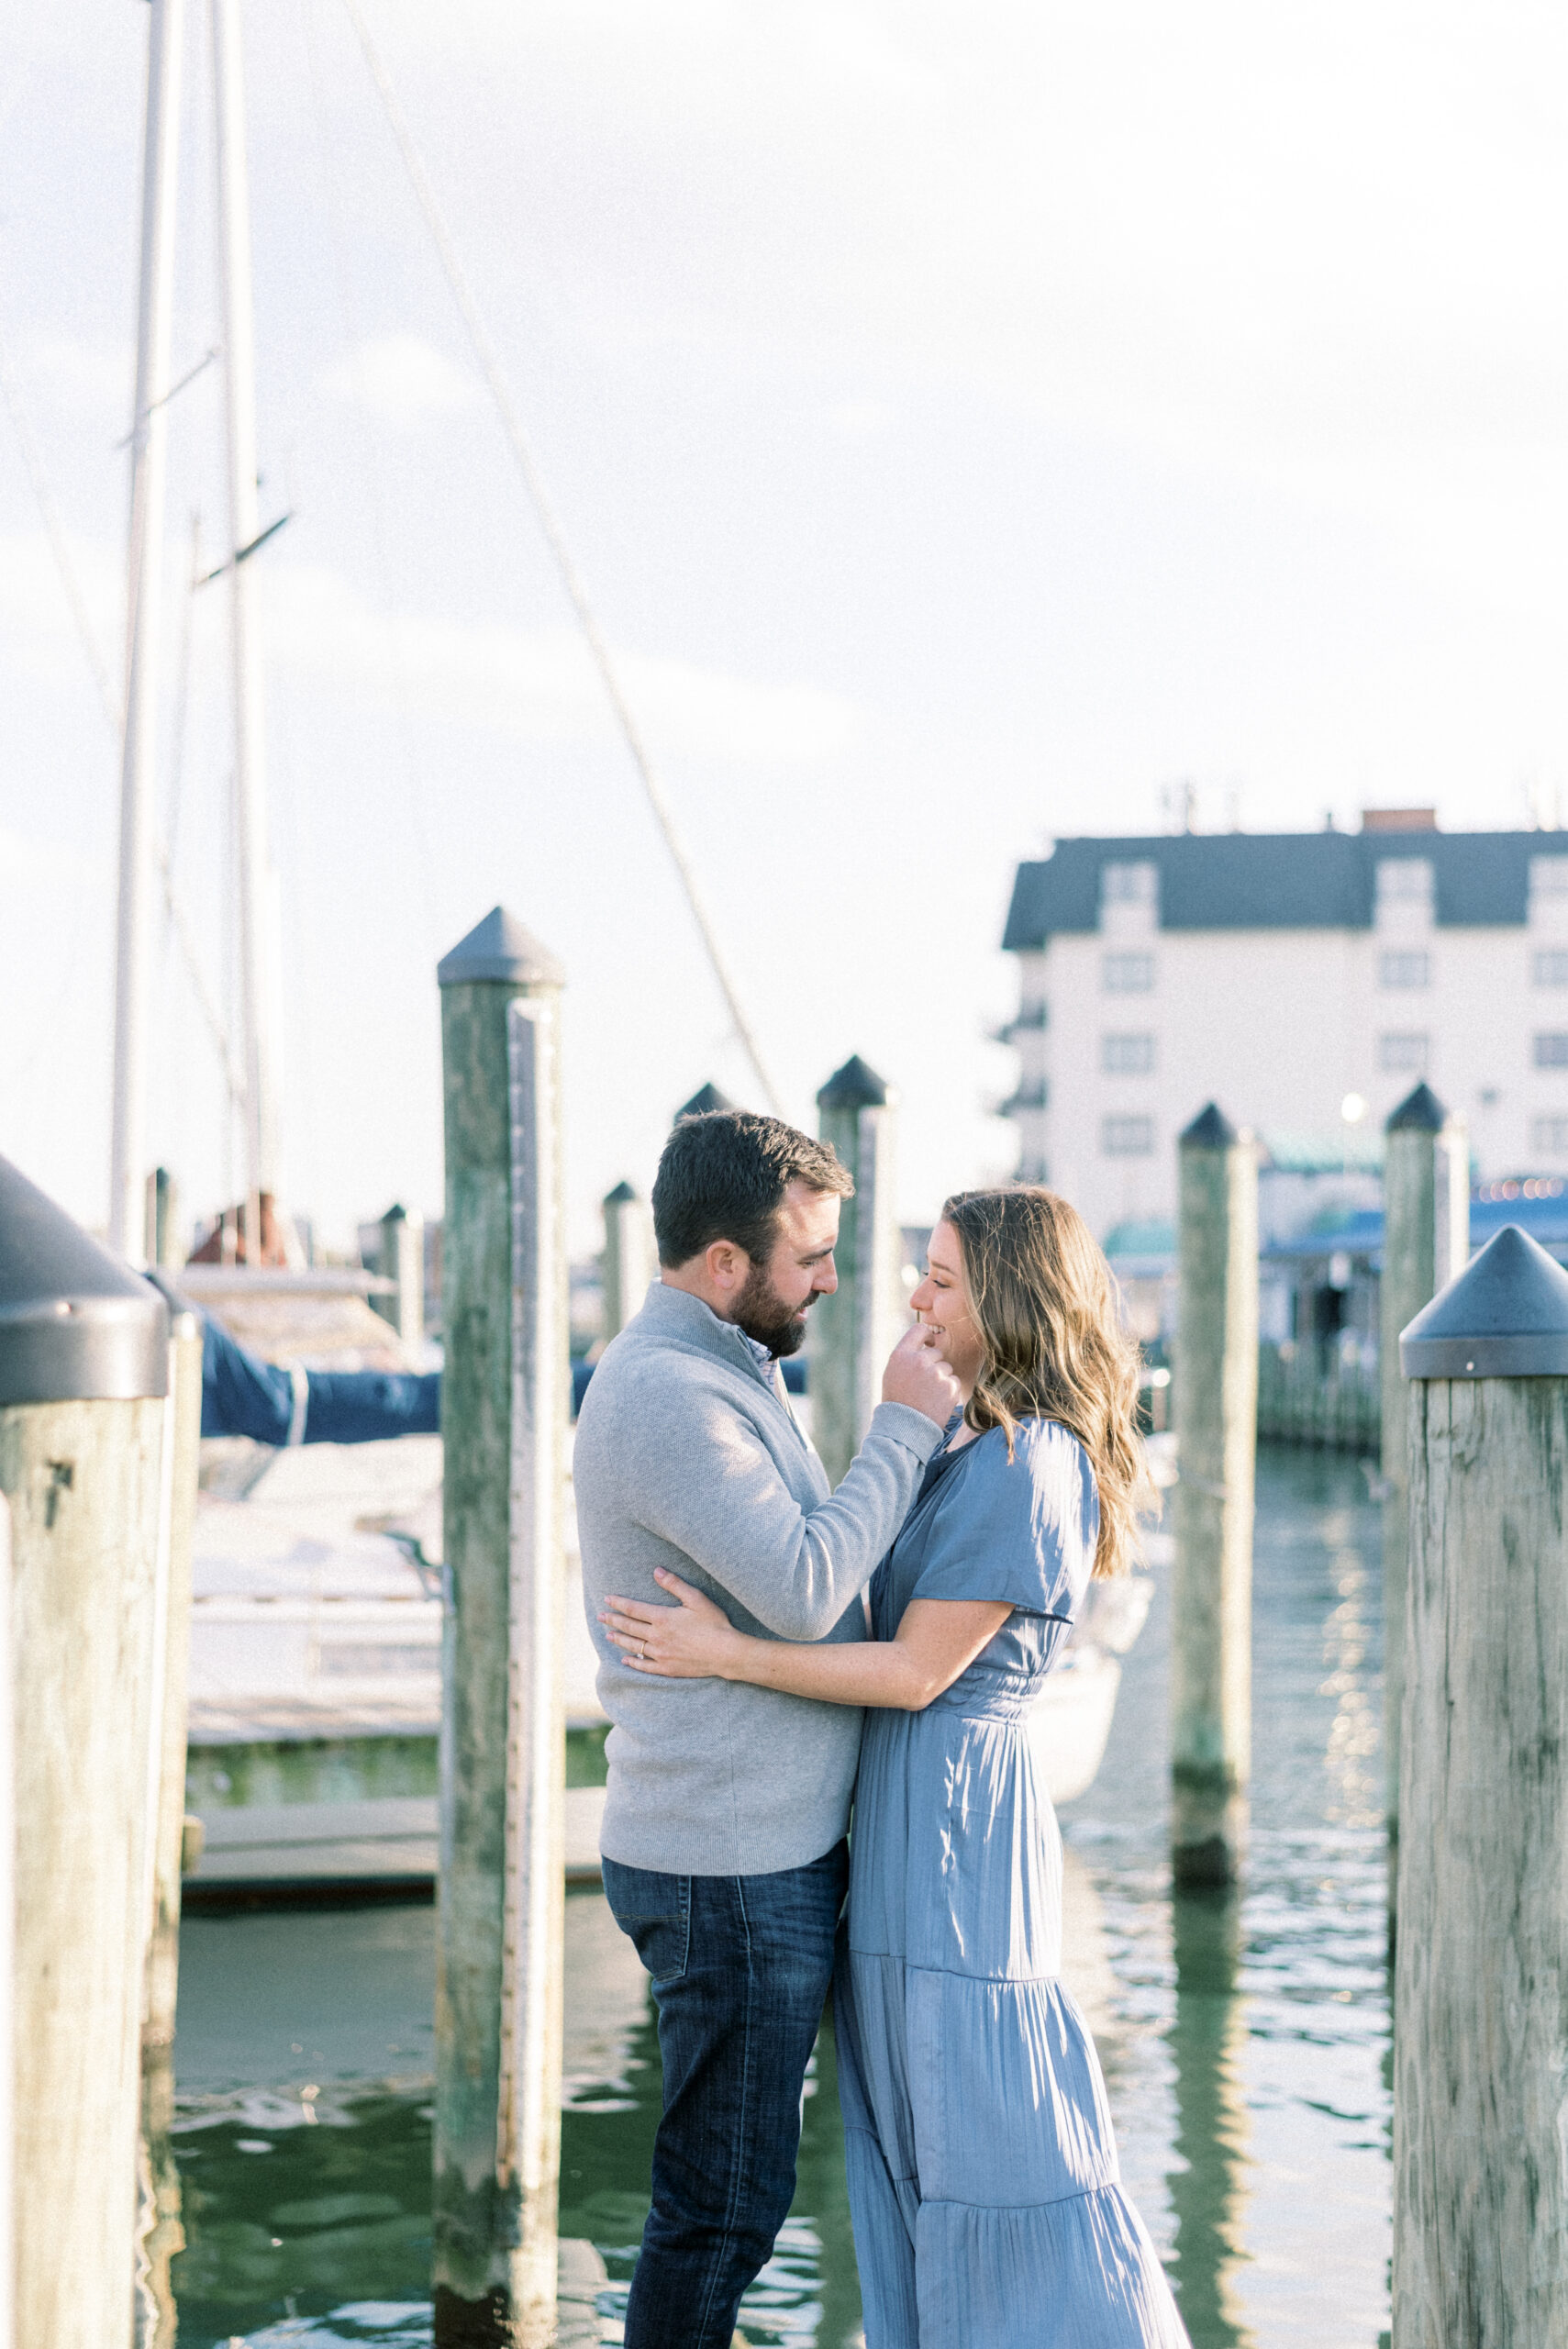 Maryland wedding photographer captures couple dancing together on dock